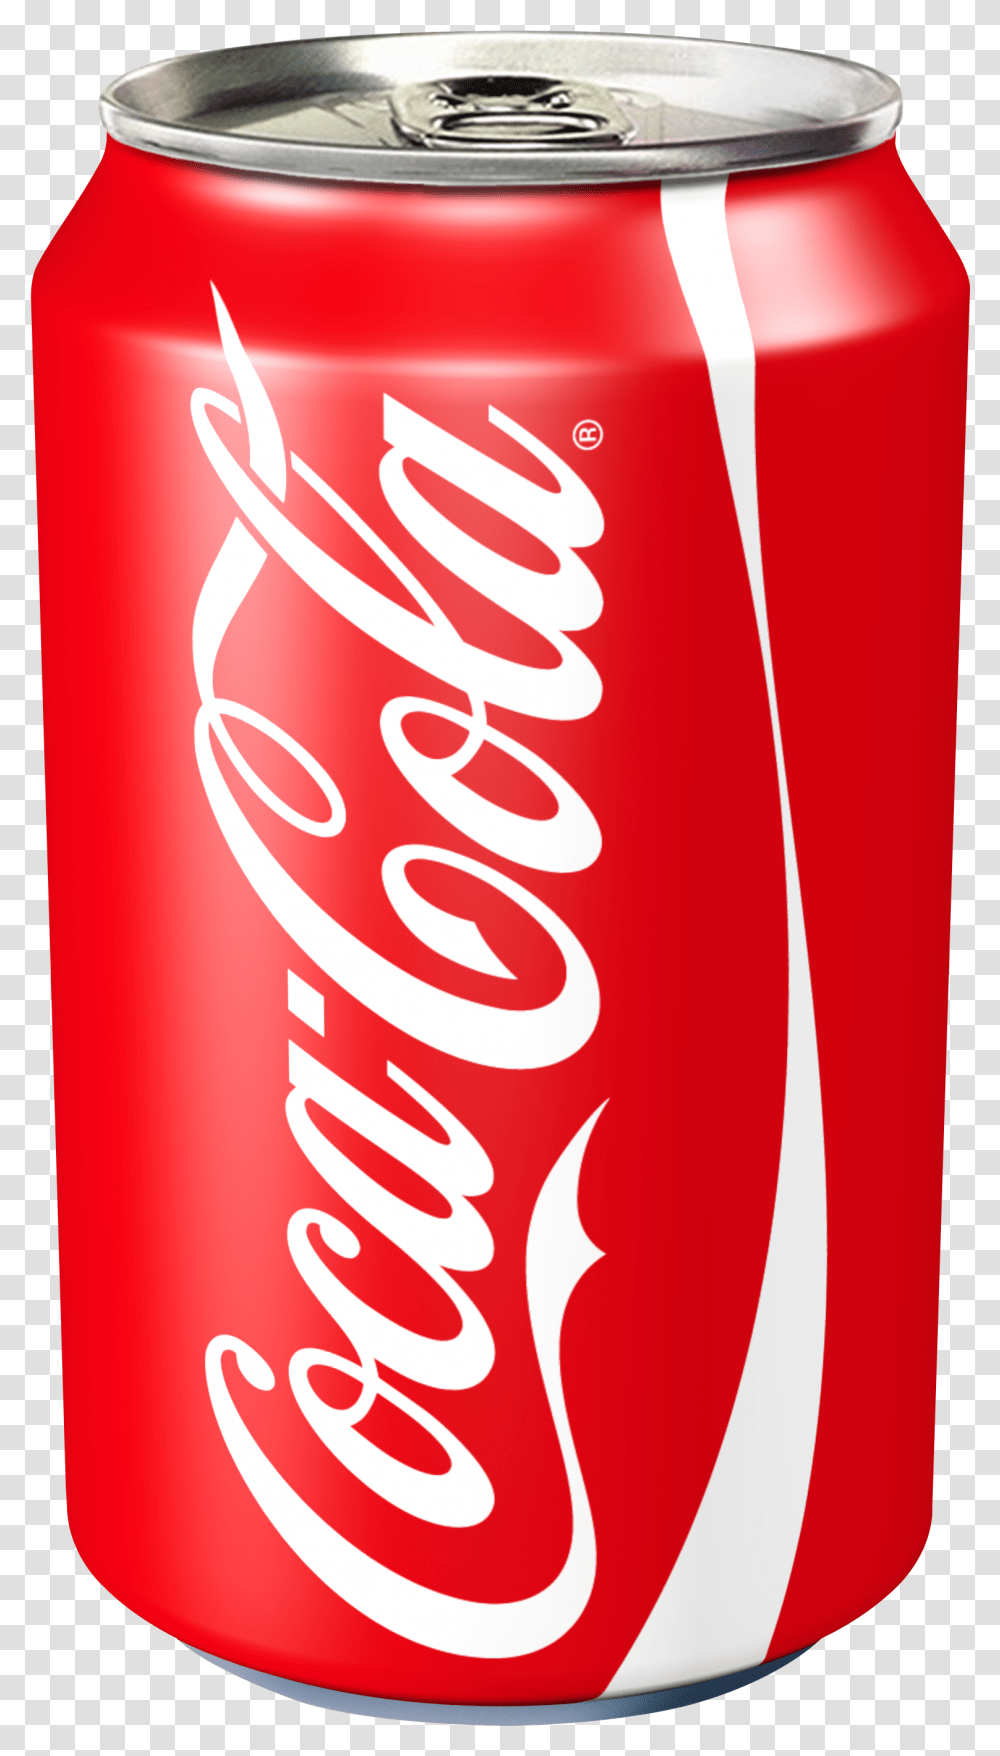 Coca Cola Can Image Coca Cola Can, Coke, Beverage, Drink, Ketchup Transparent Png